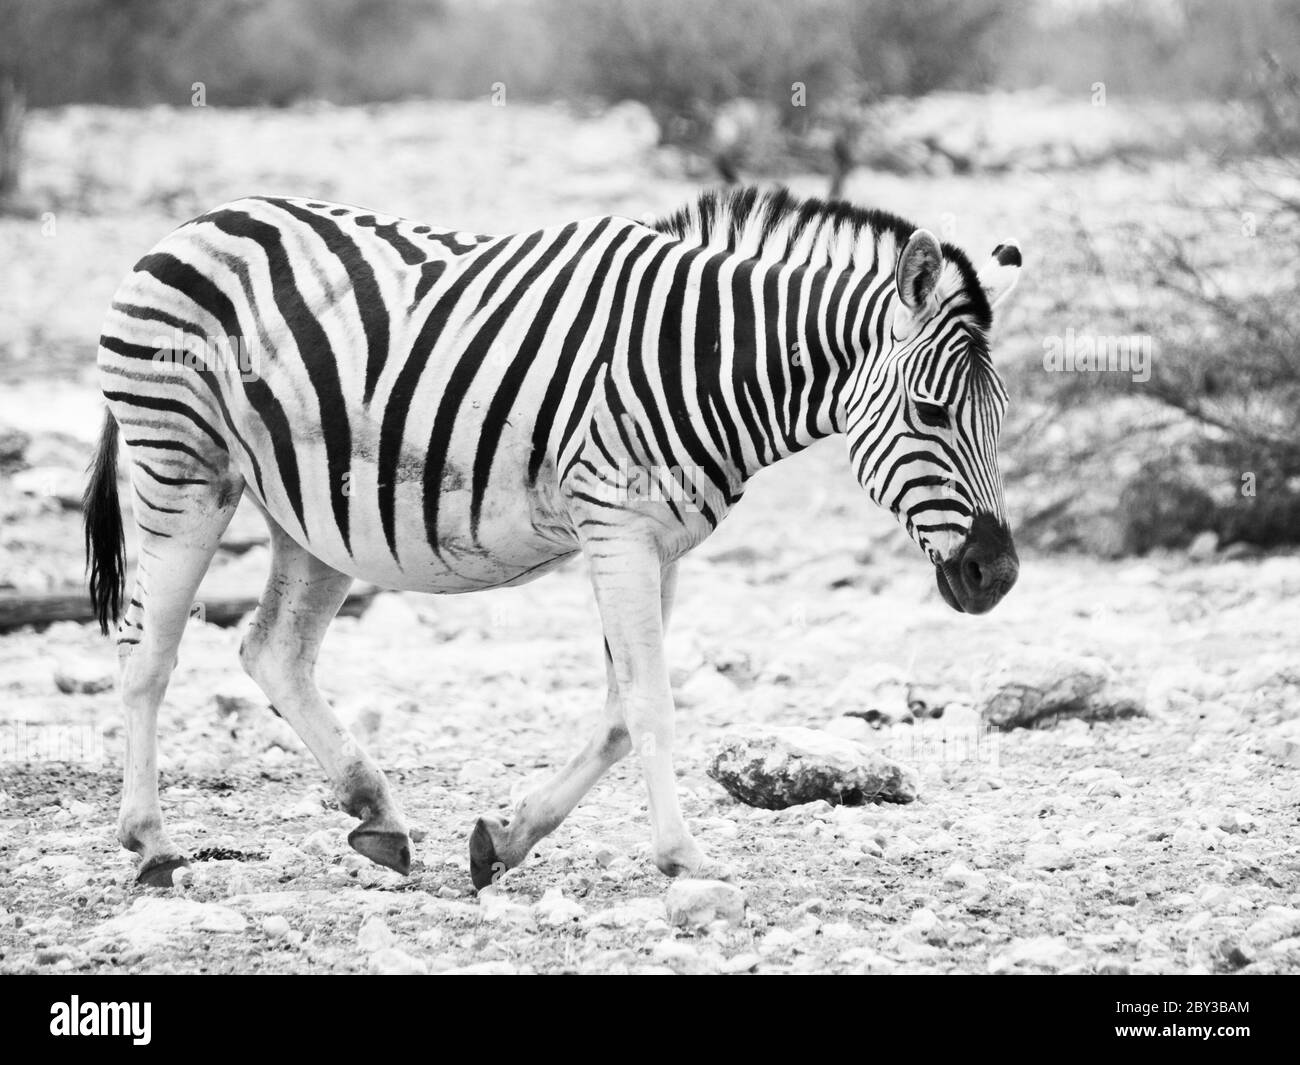 Lonesome zebra walks across dry land and looks very sad. Balck and white image. Stock Photo